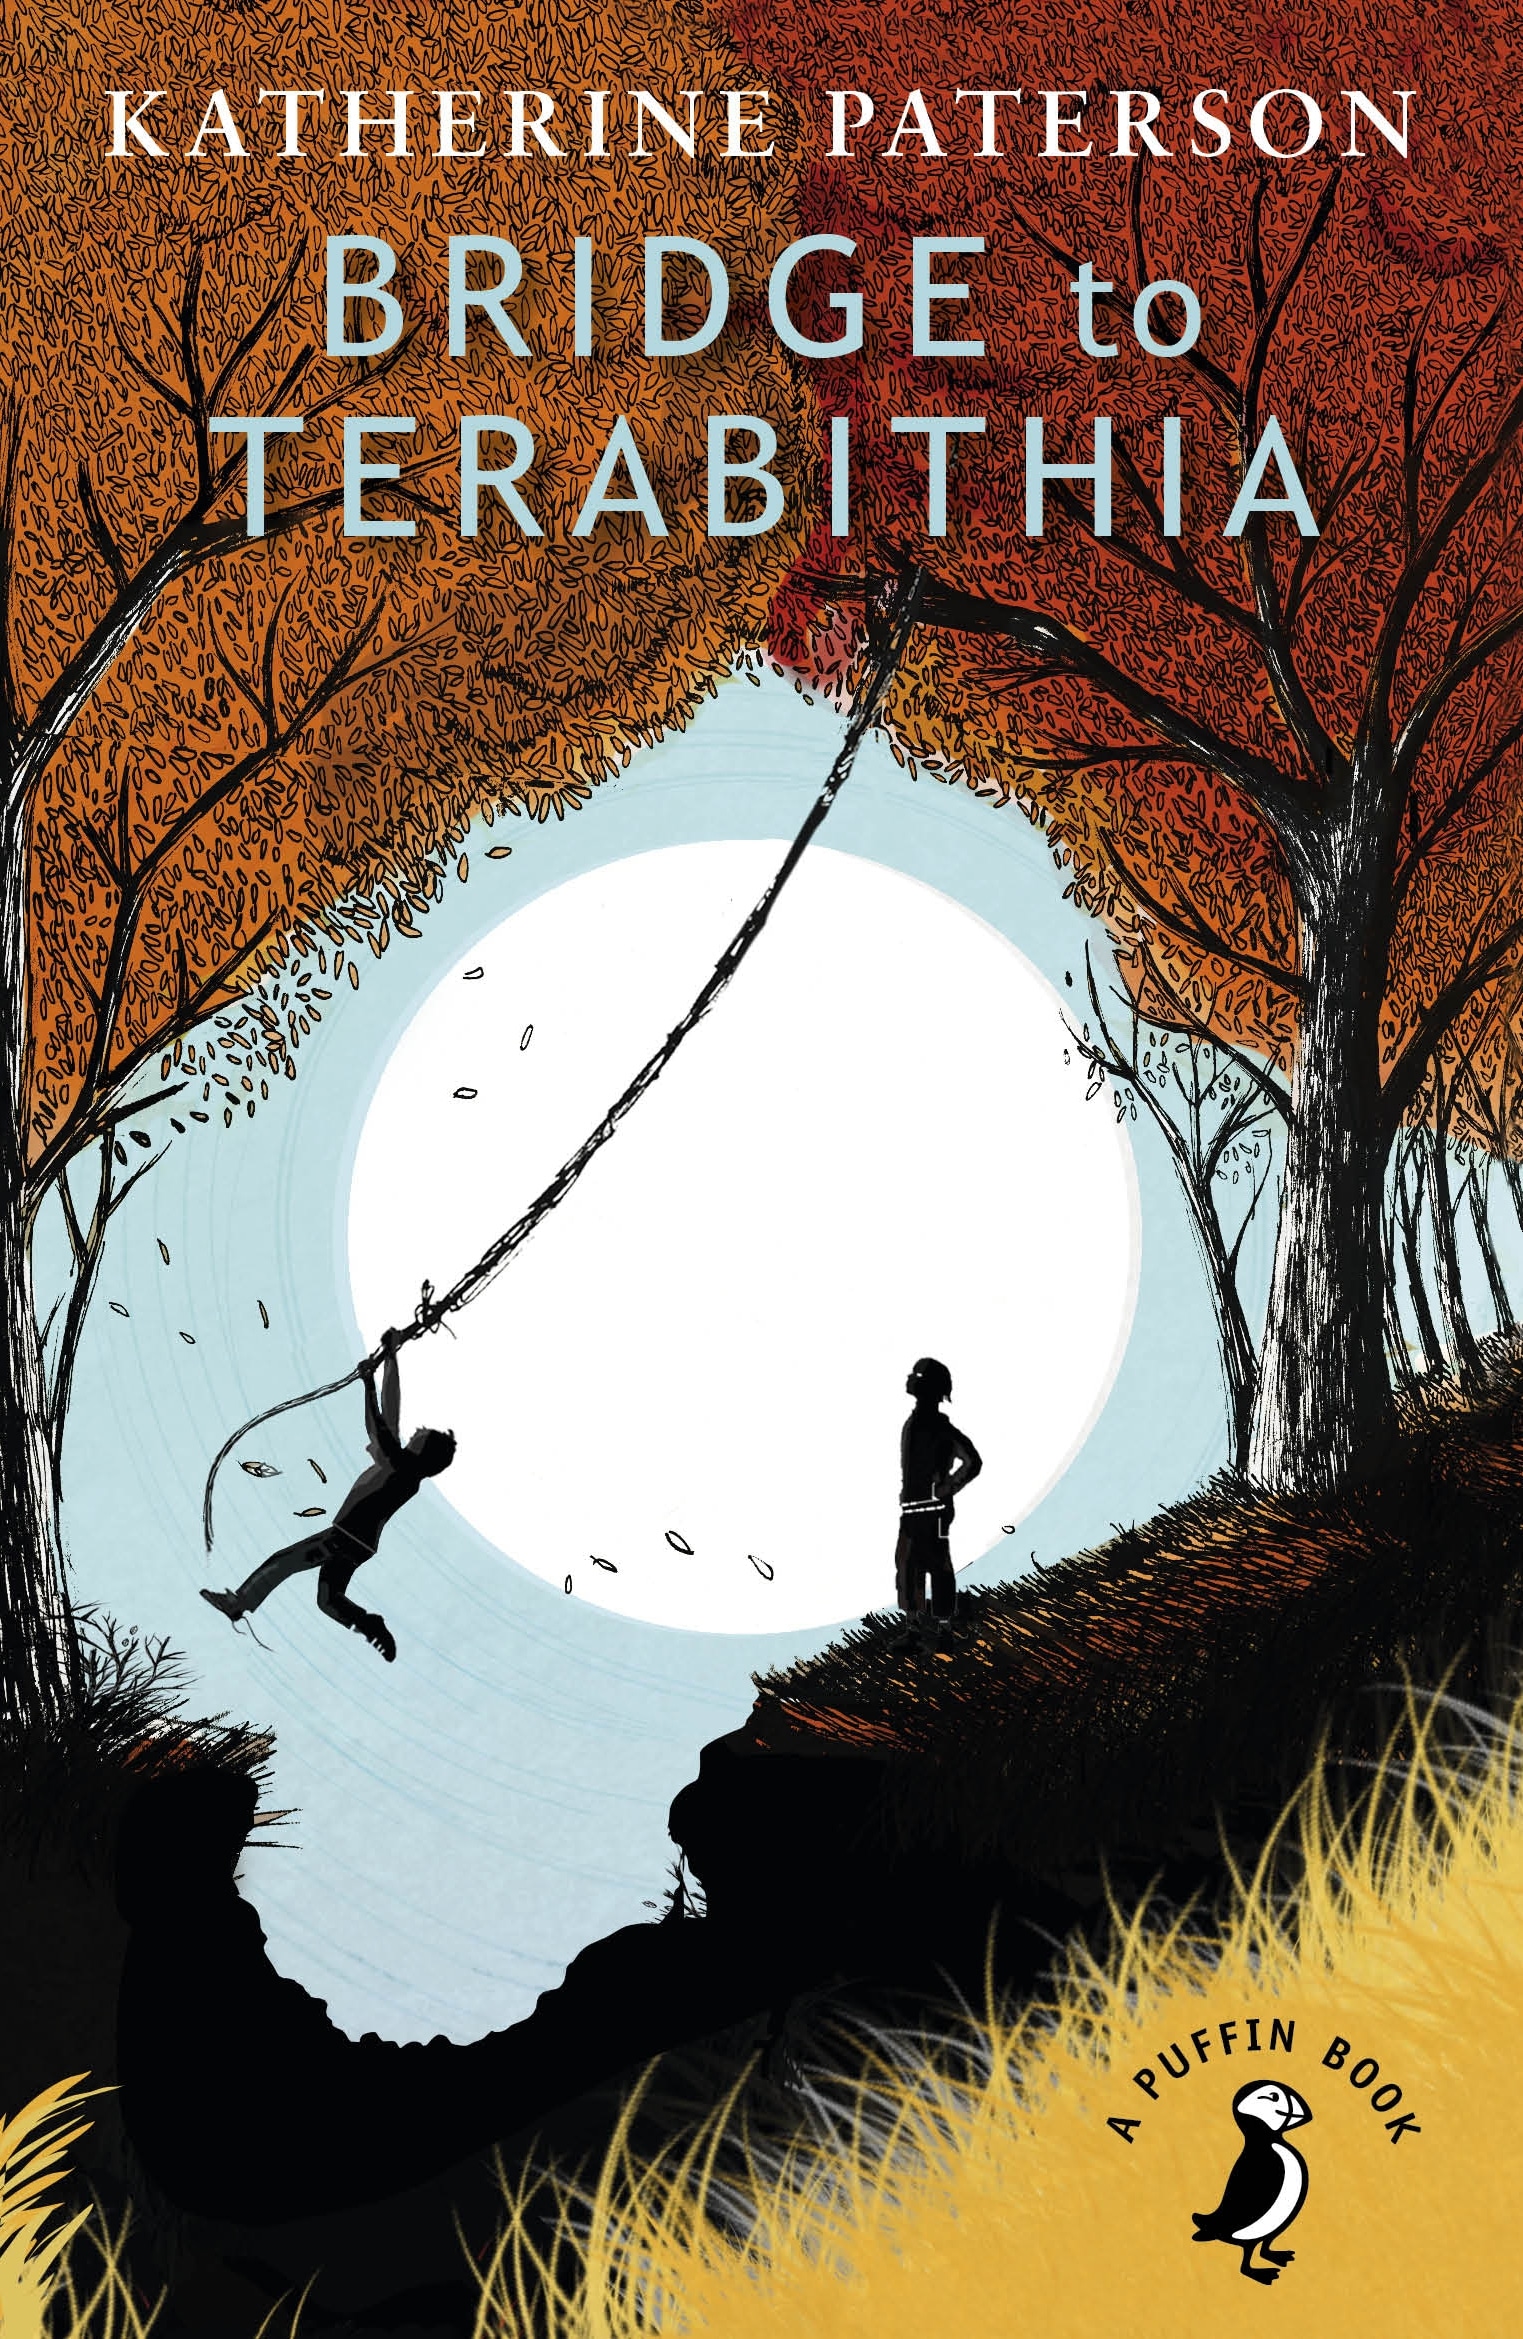 Book “Bridge to Terabithia” by Katherine Paterson — July 2, 2015